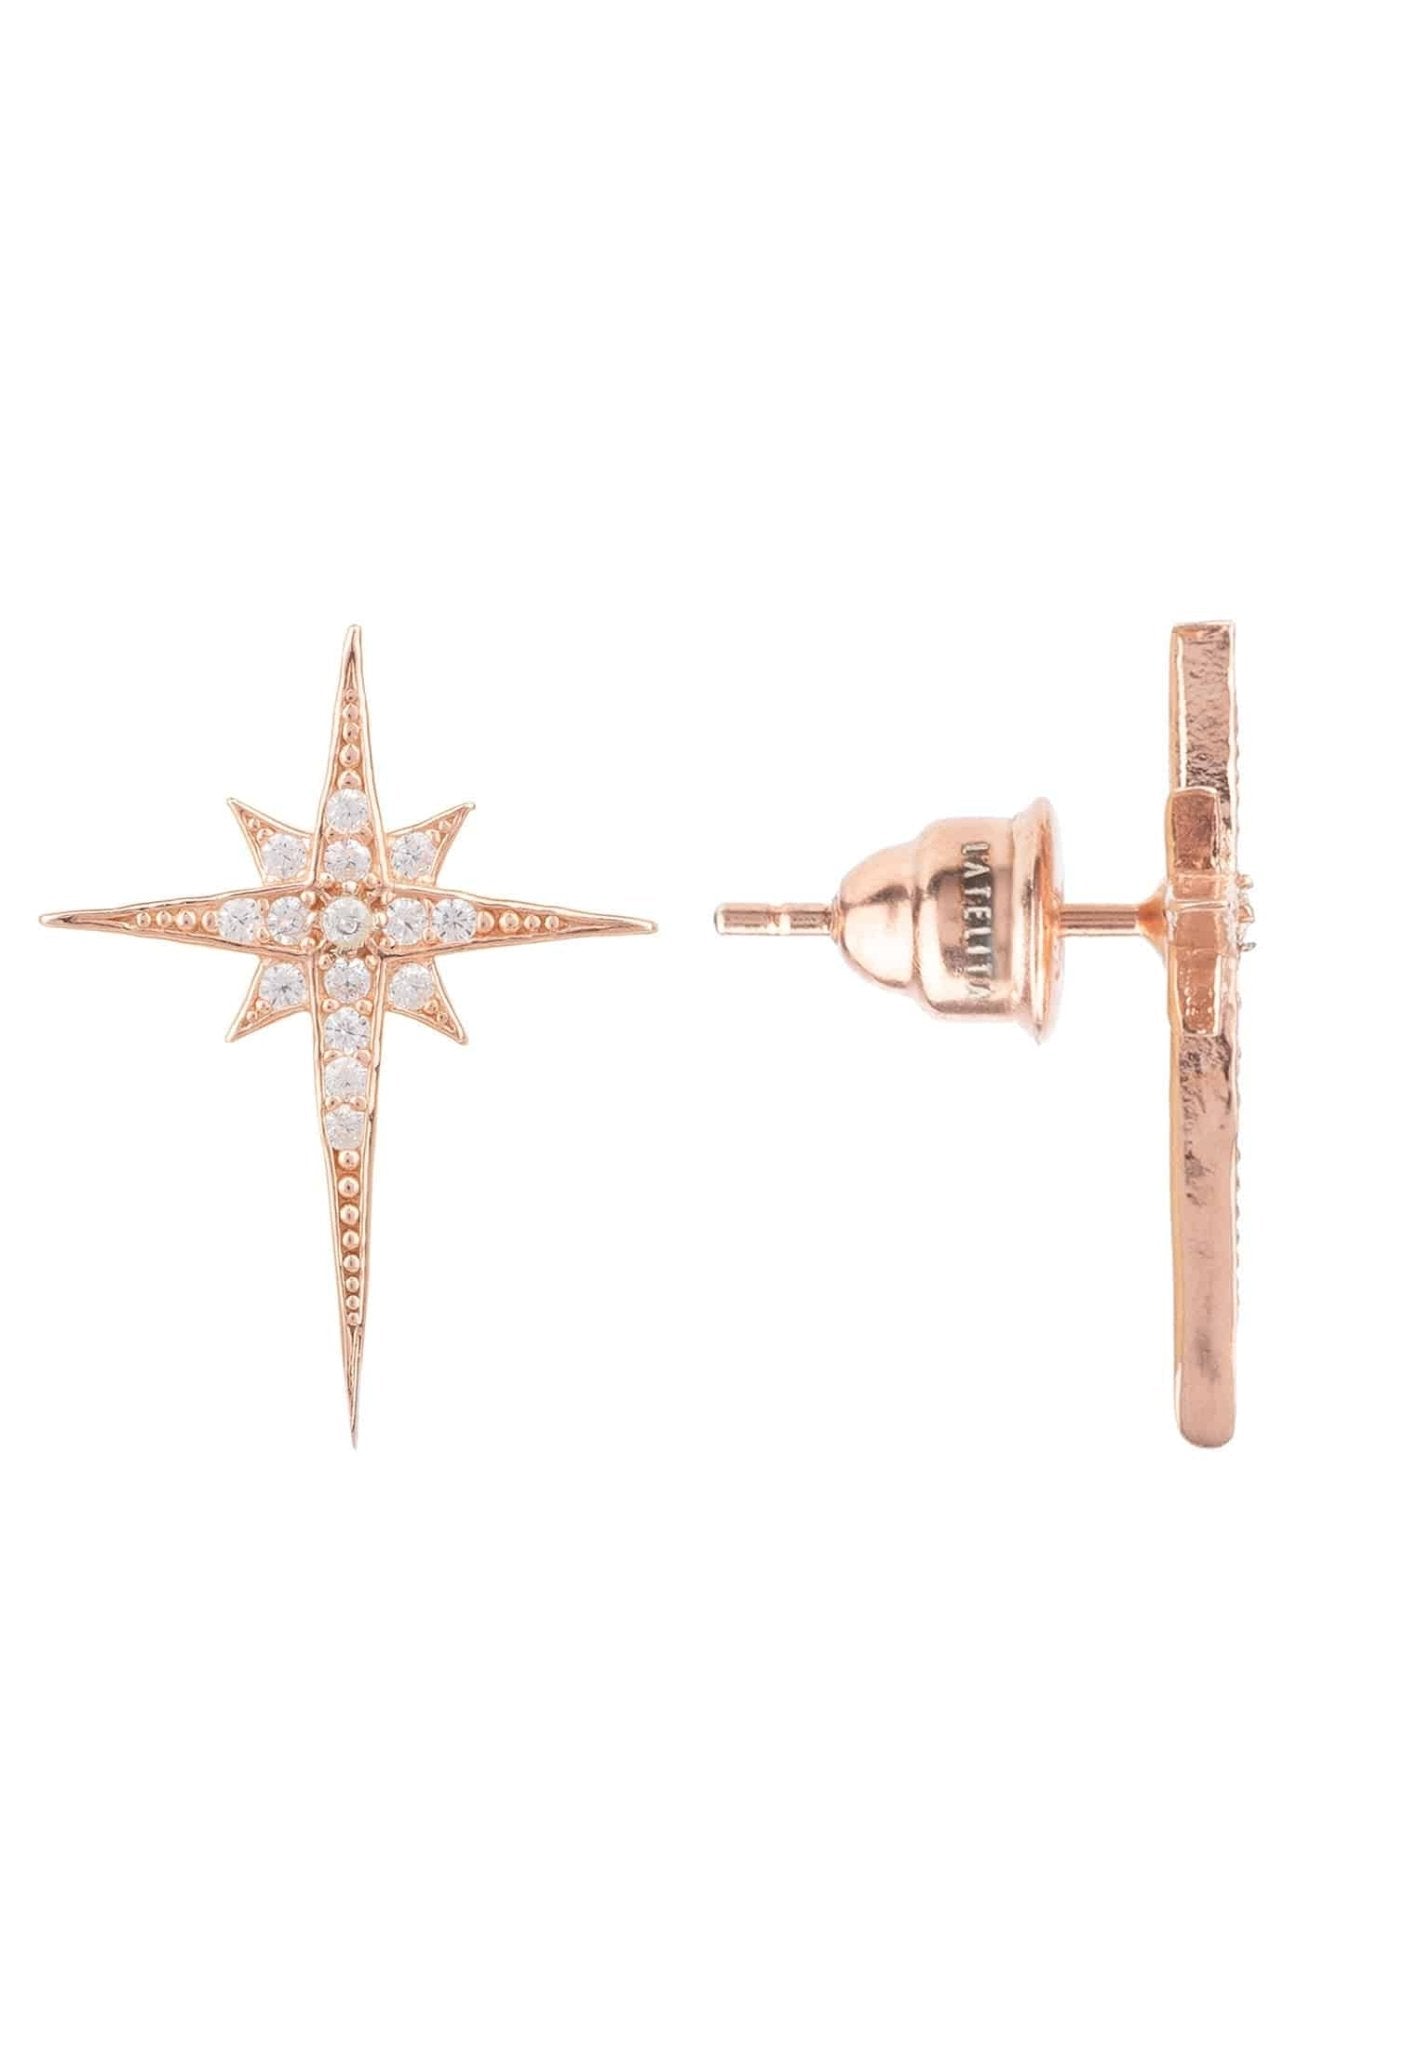 North Star Small Stud Earrings Rosegold - LATELITA Earrings